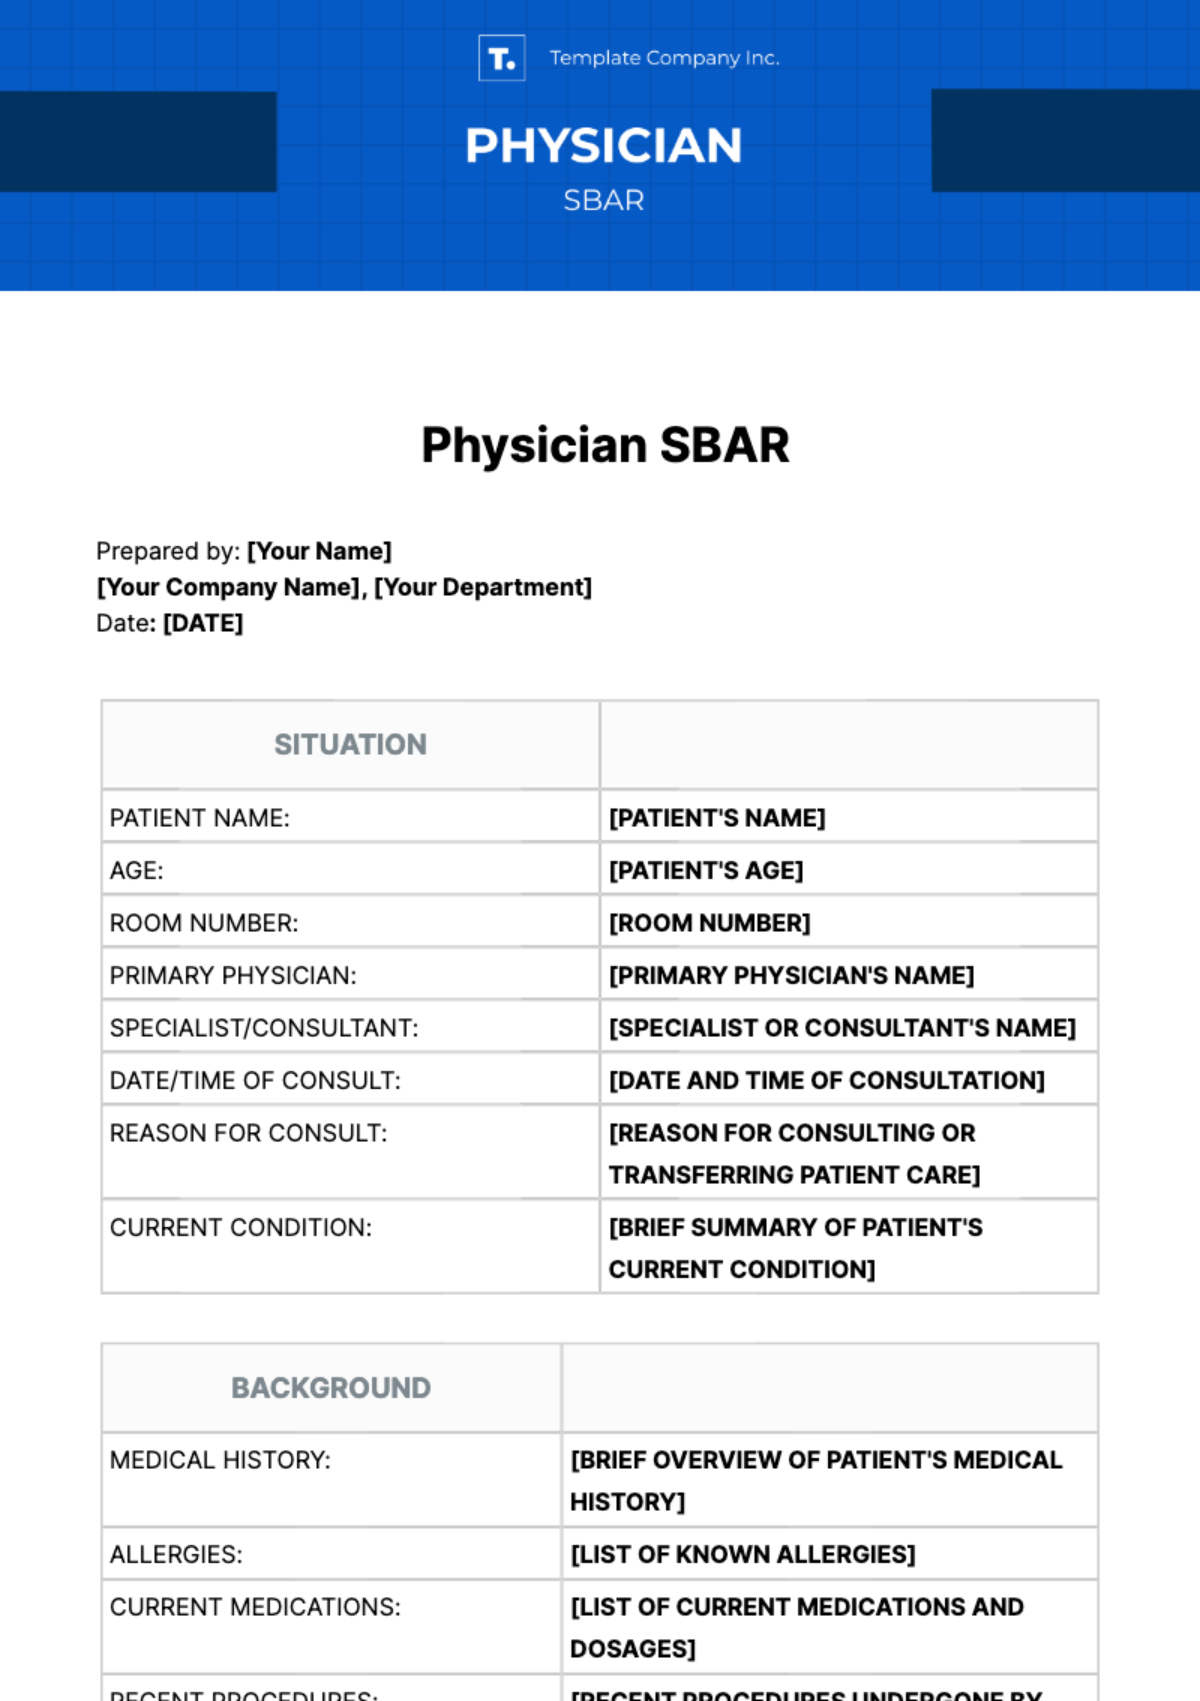 Free Physician SBAR Template